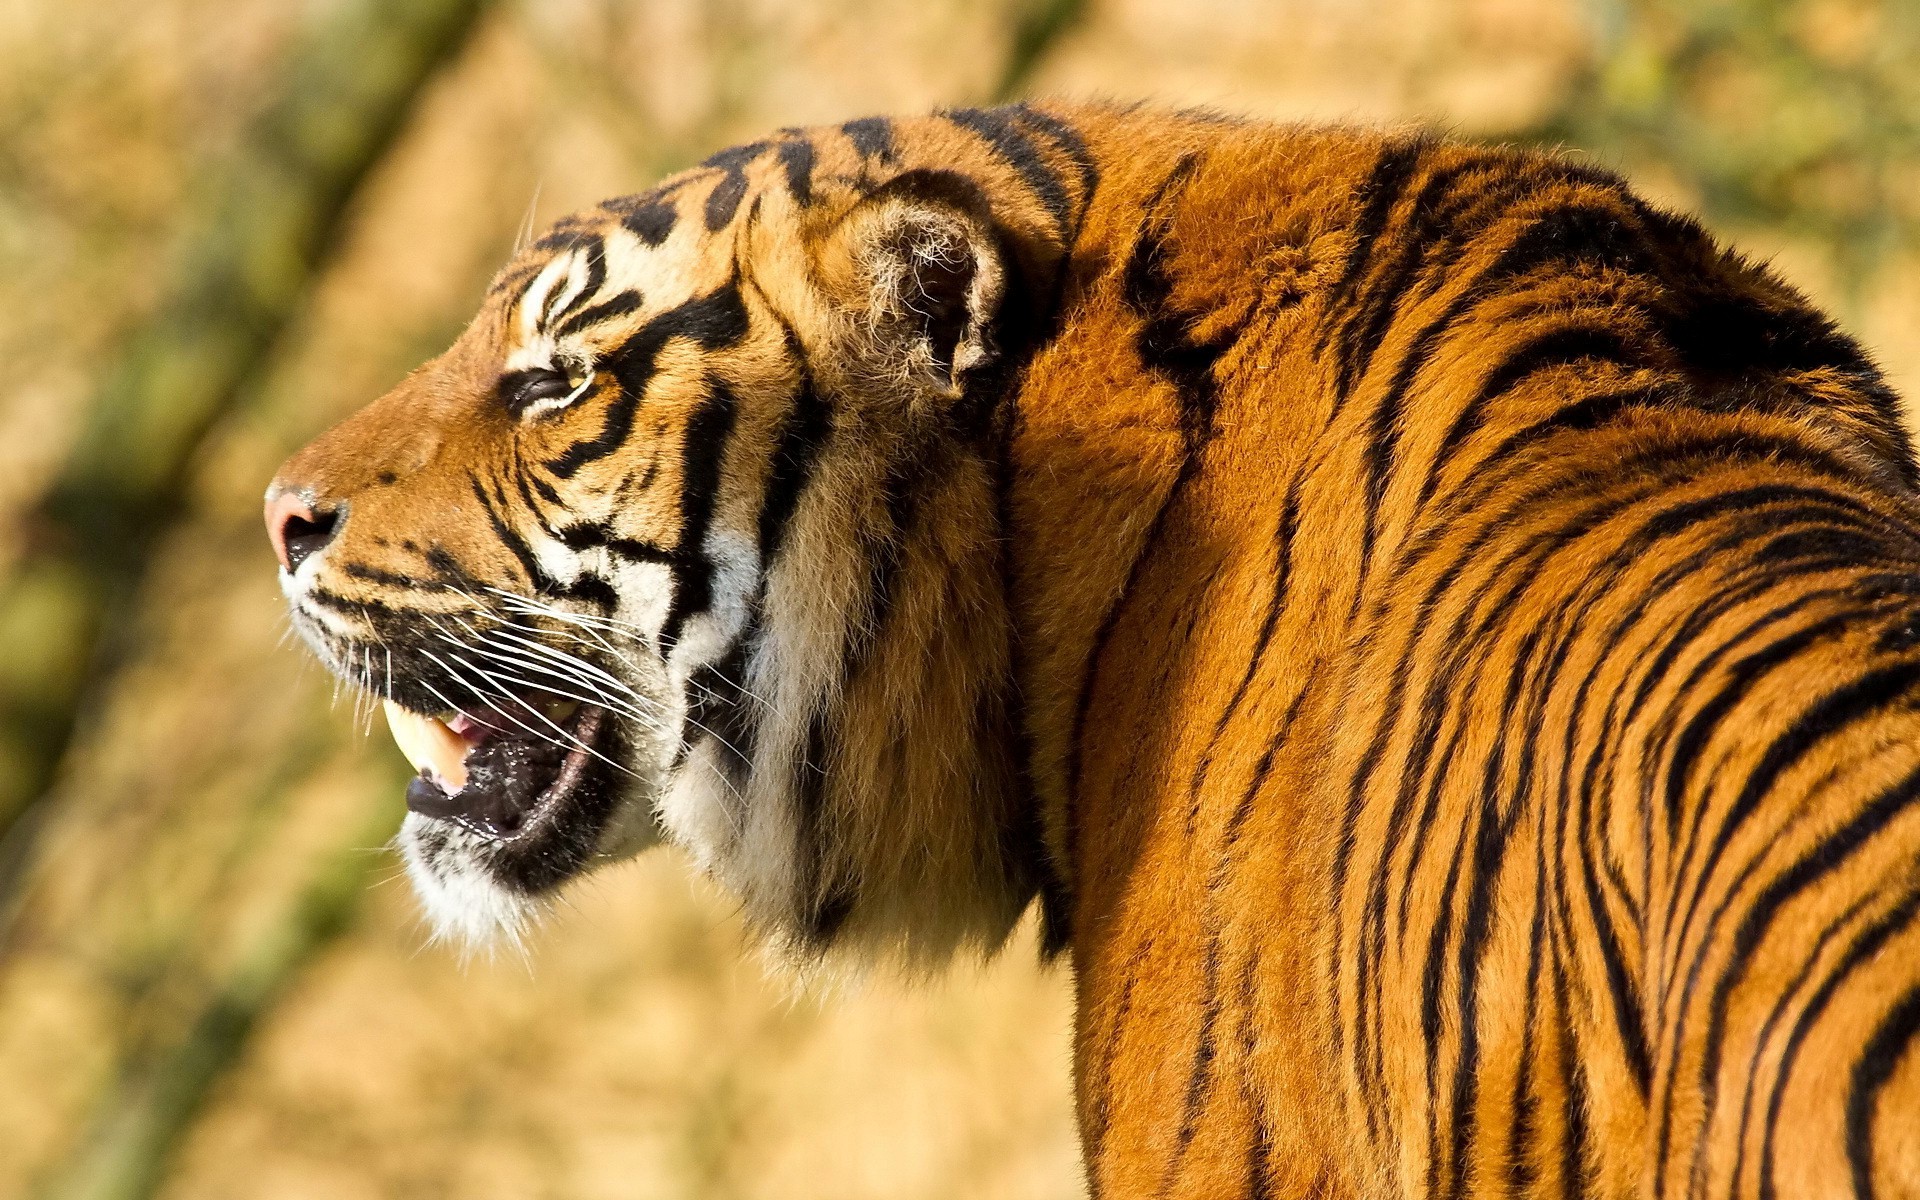 tigre enojado fondo de pantalla hd,tigre,fauna silvestre,animal terrestre,tigre de bengala,tigre siberiano